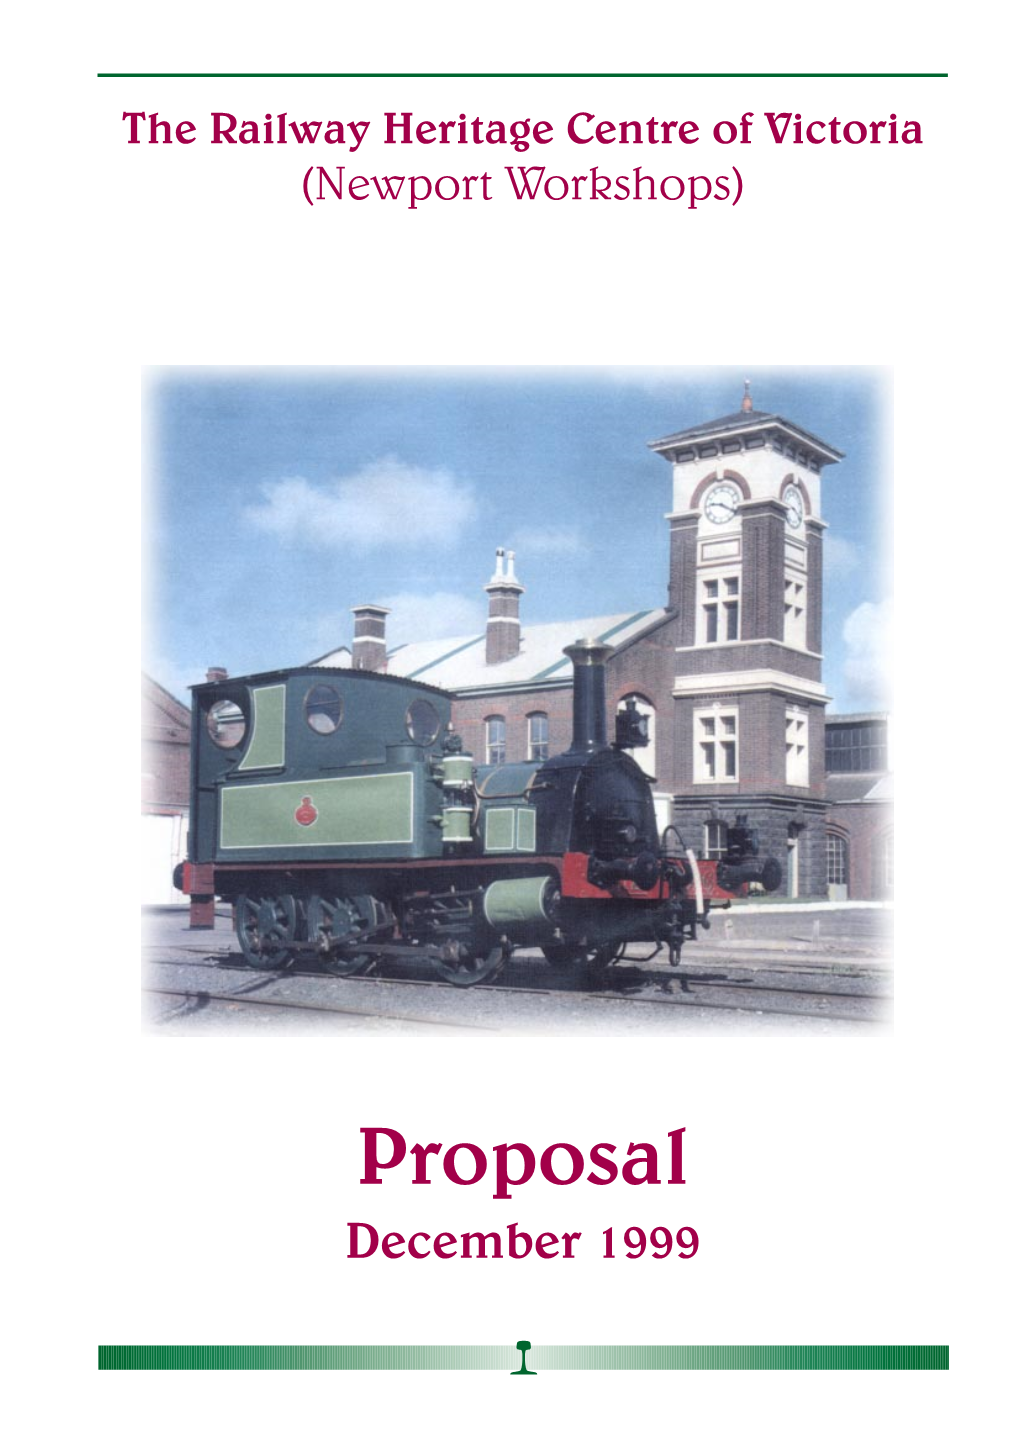 Proposal December 1999 Contents